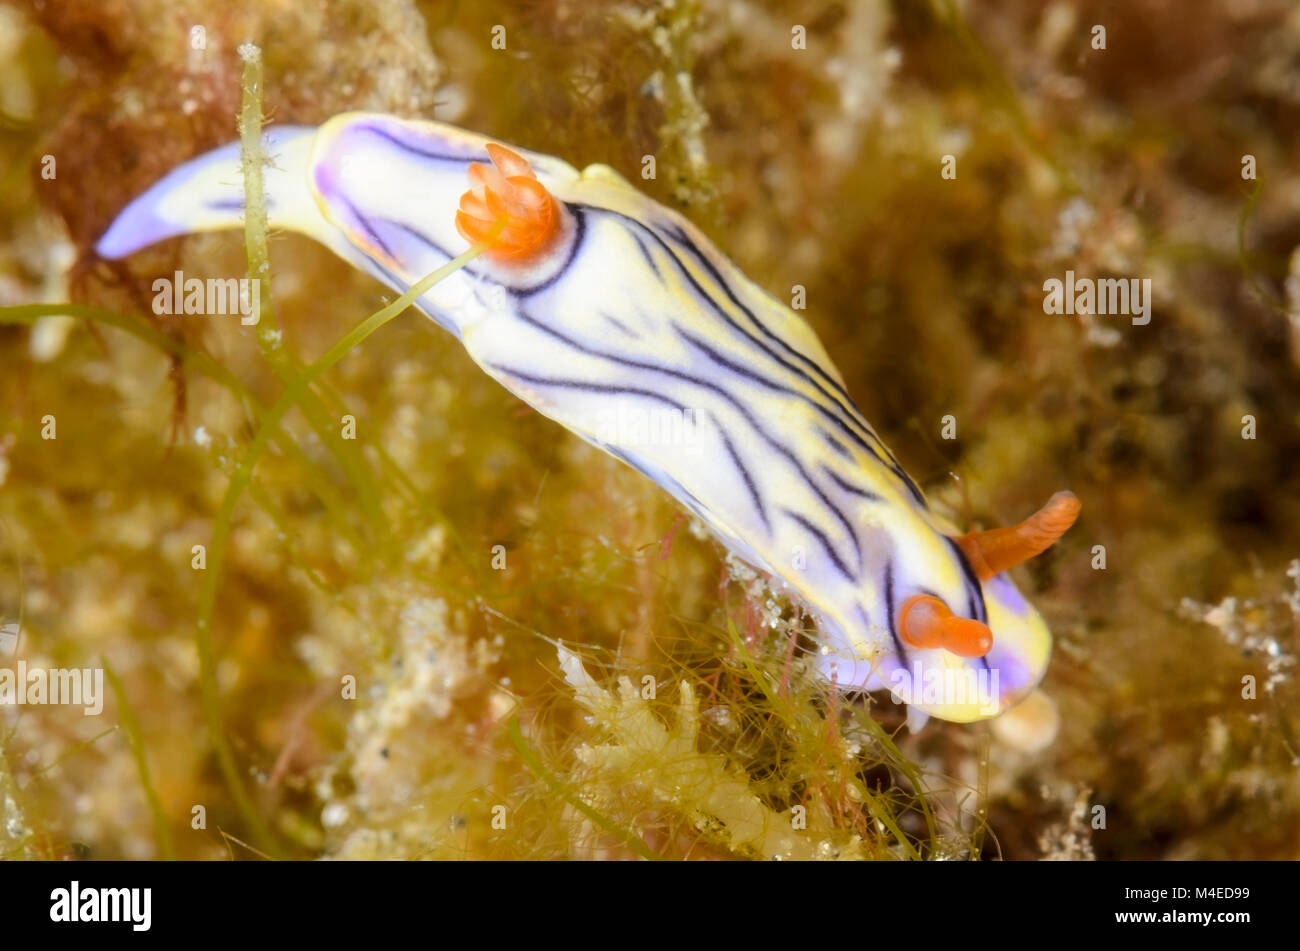 sea slug or nudibranch, Hypselodoris zephyra, Lembeh Strait, North Sulawesi, Indonesia, Pacific Stock Photo